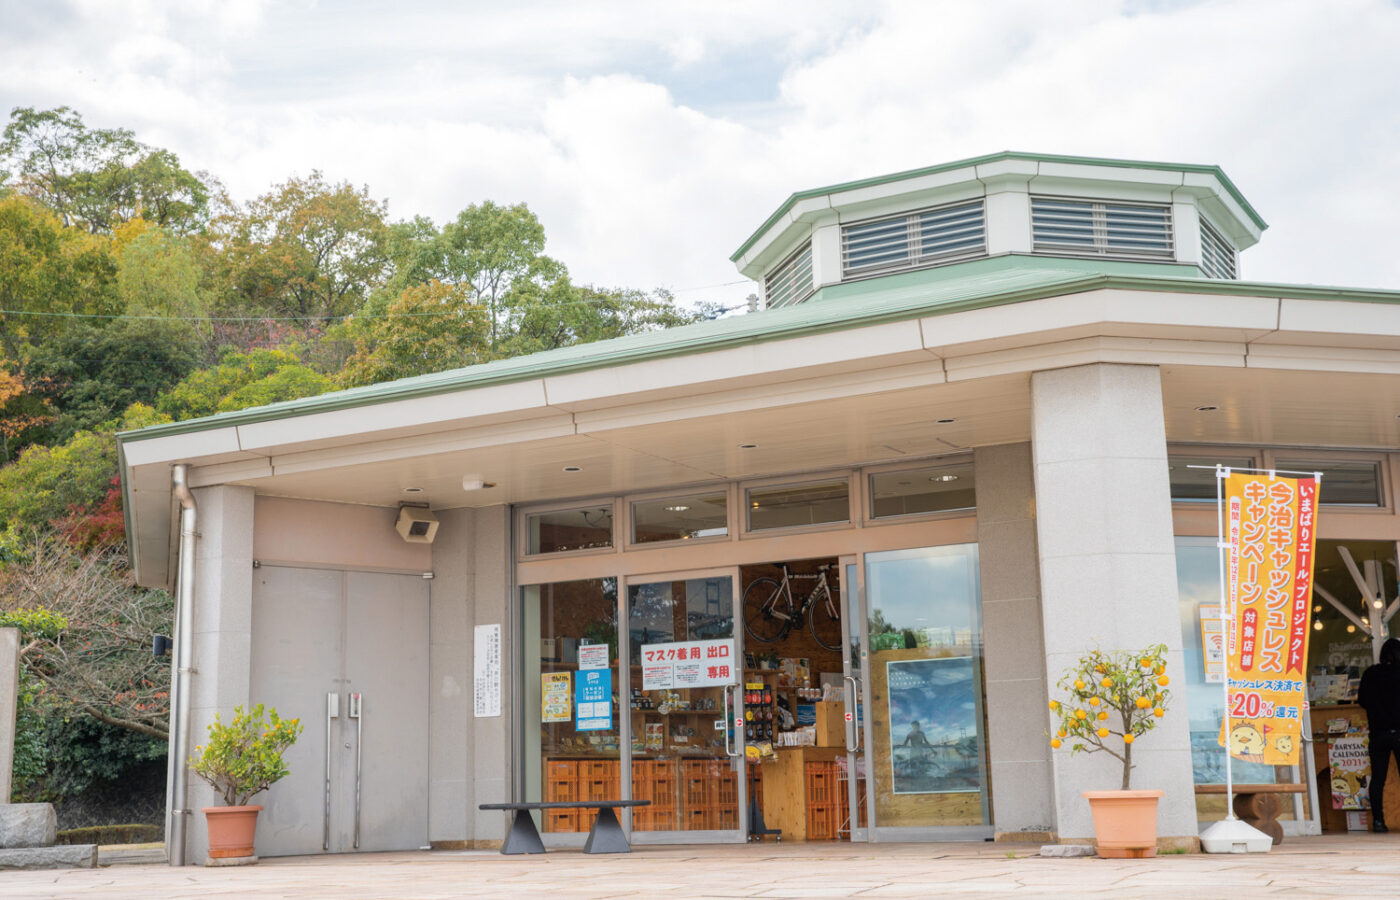 Kurushima Kaikyō  Scenic Overlook Rest Stop and Shop